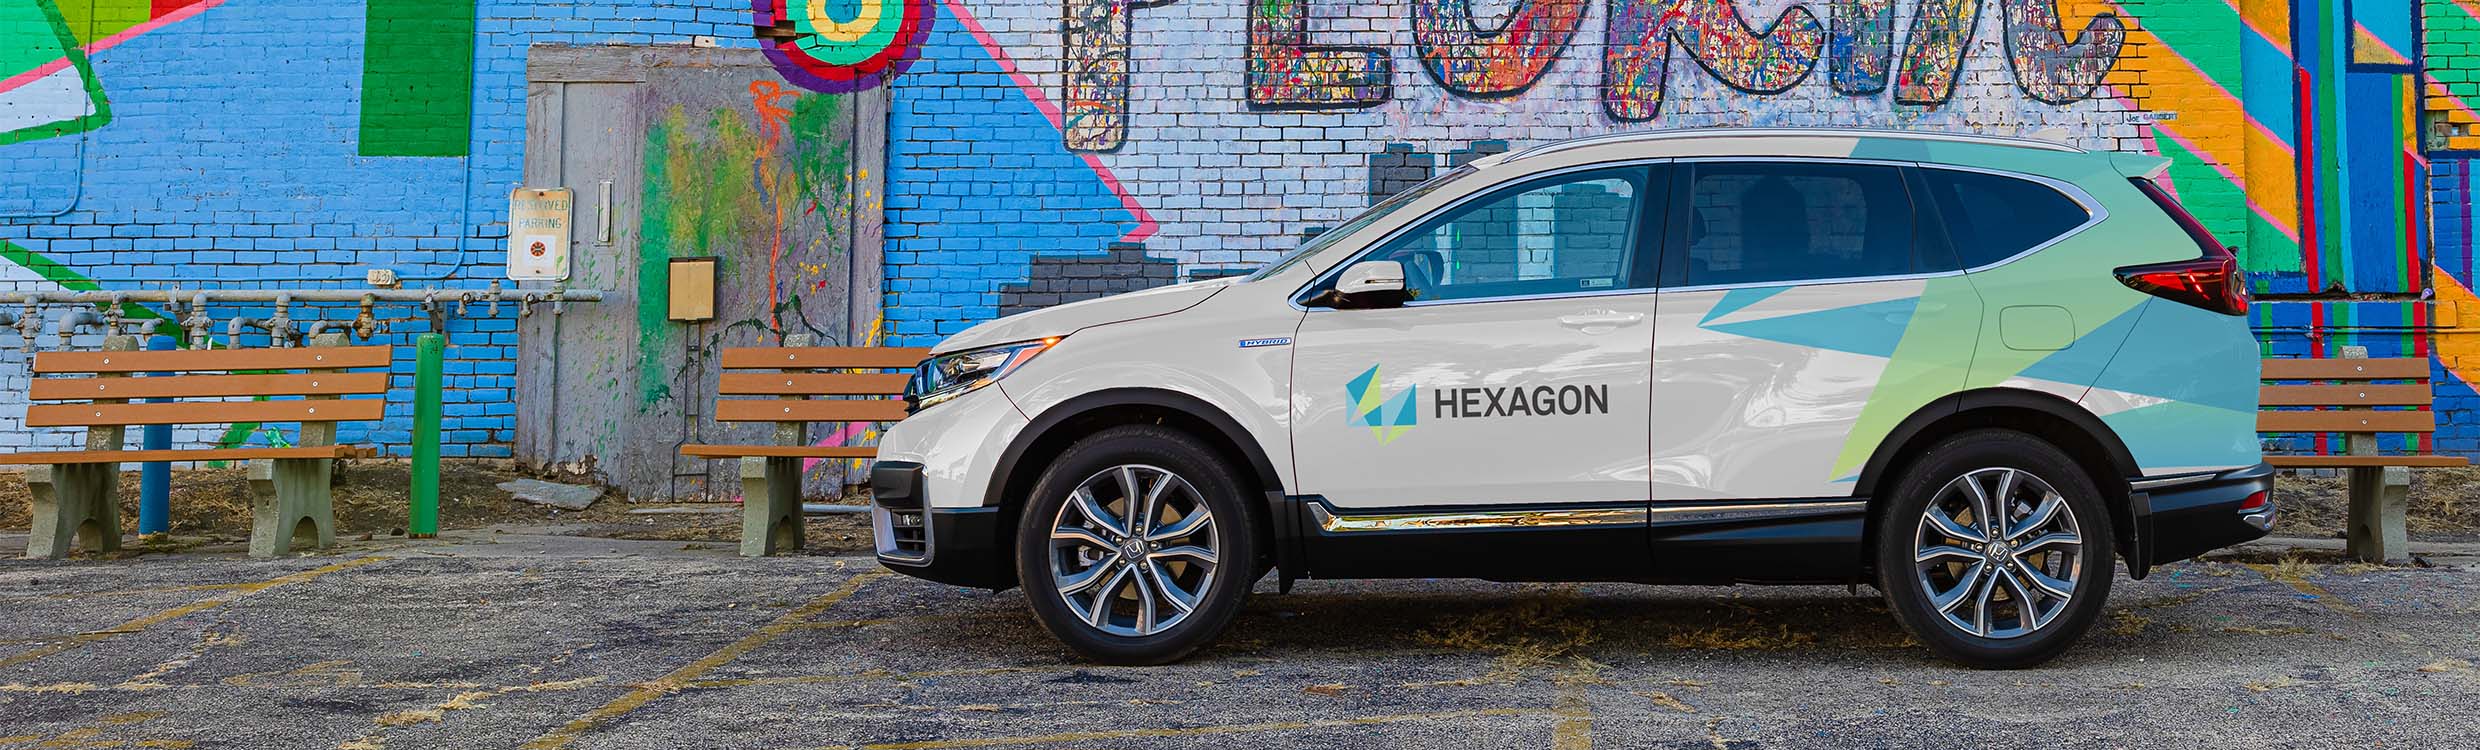 White Hexagon branded Honda CRV on a colorful background